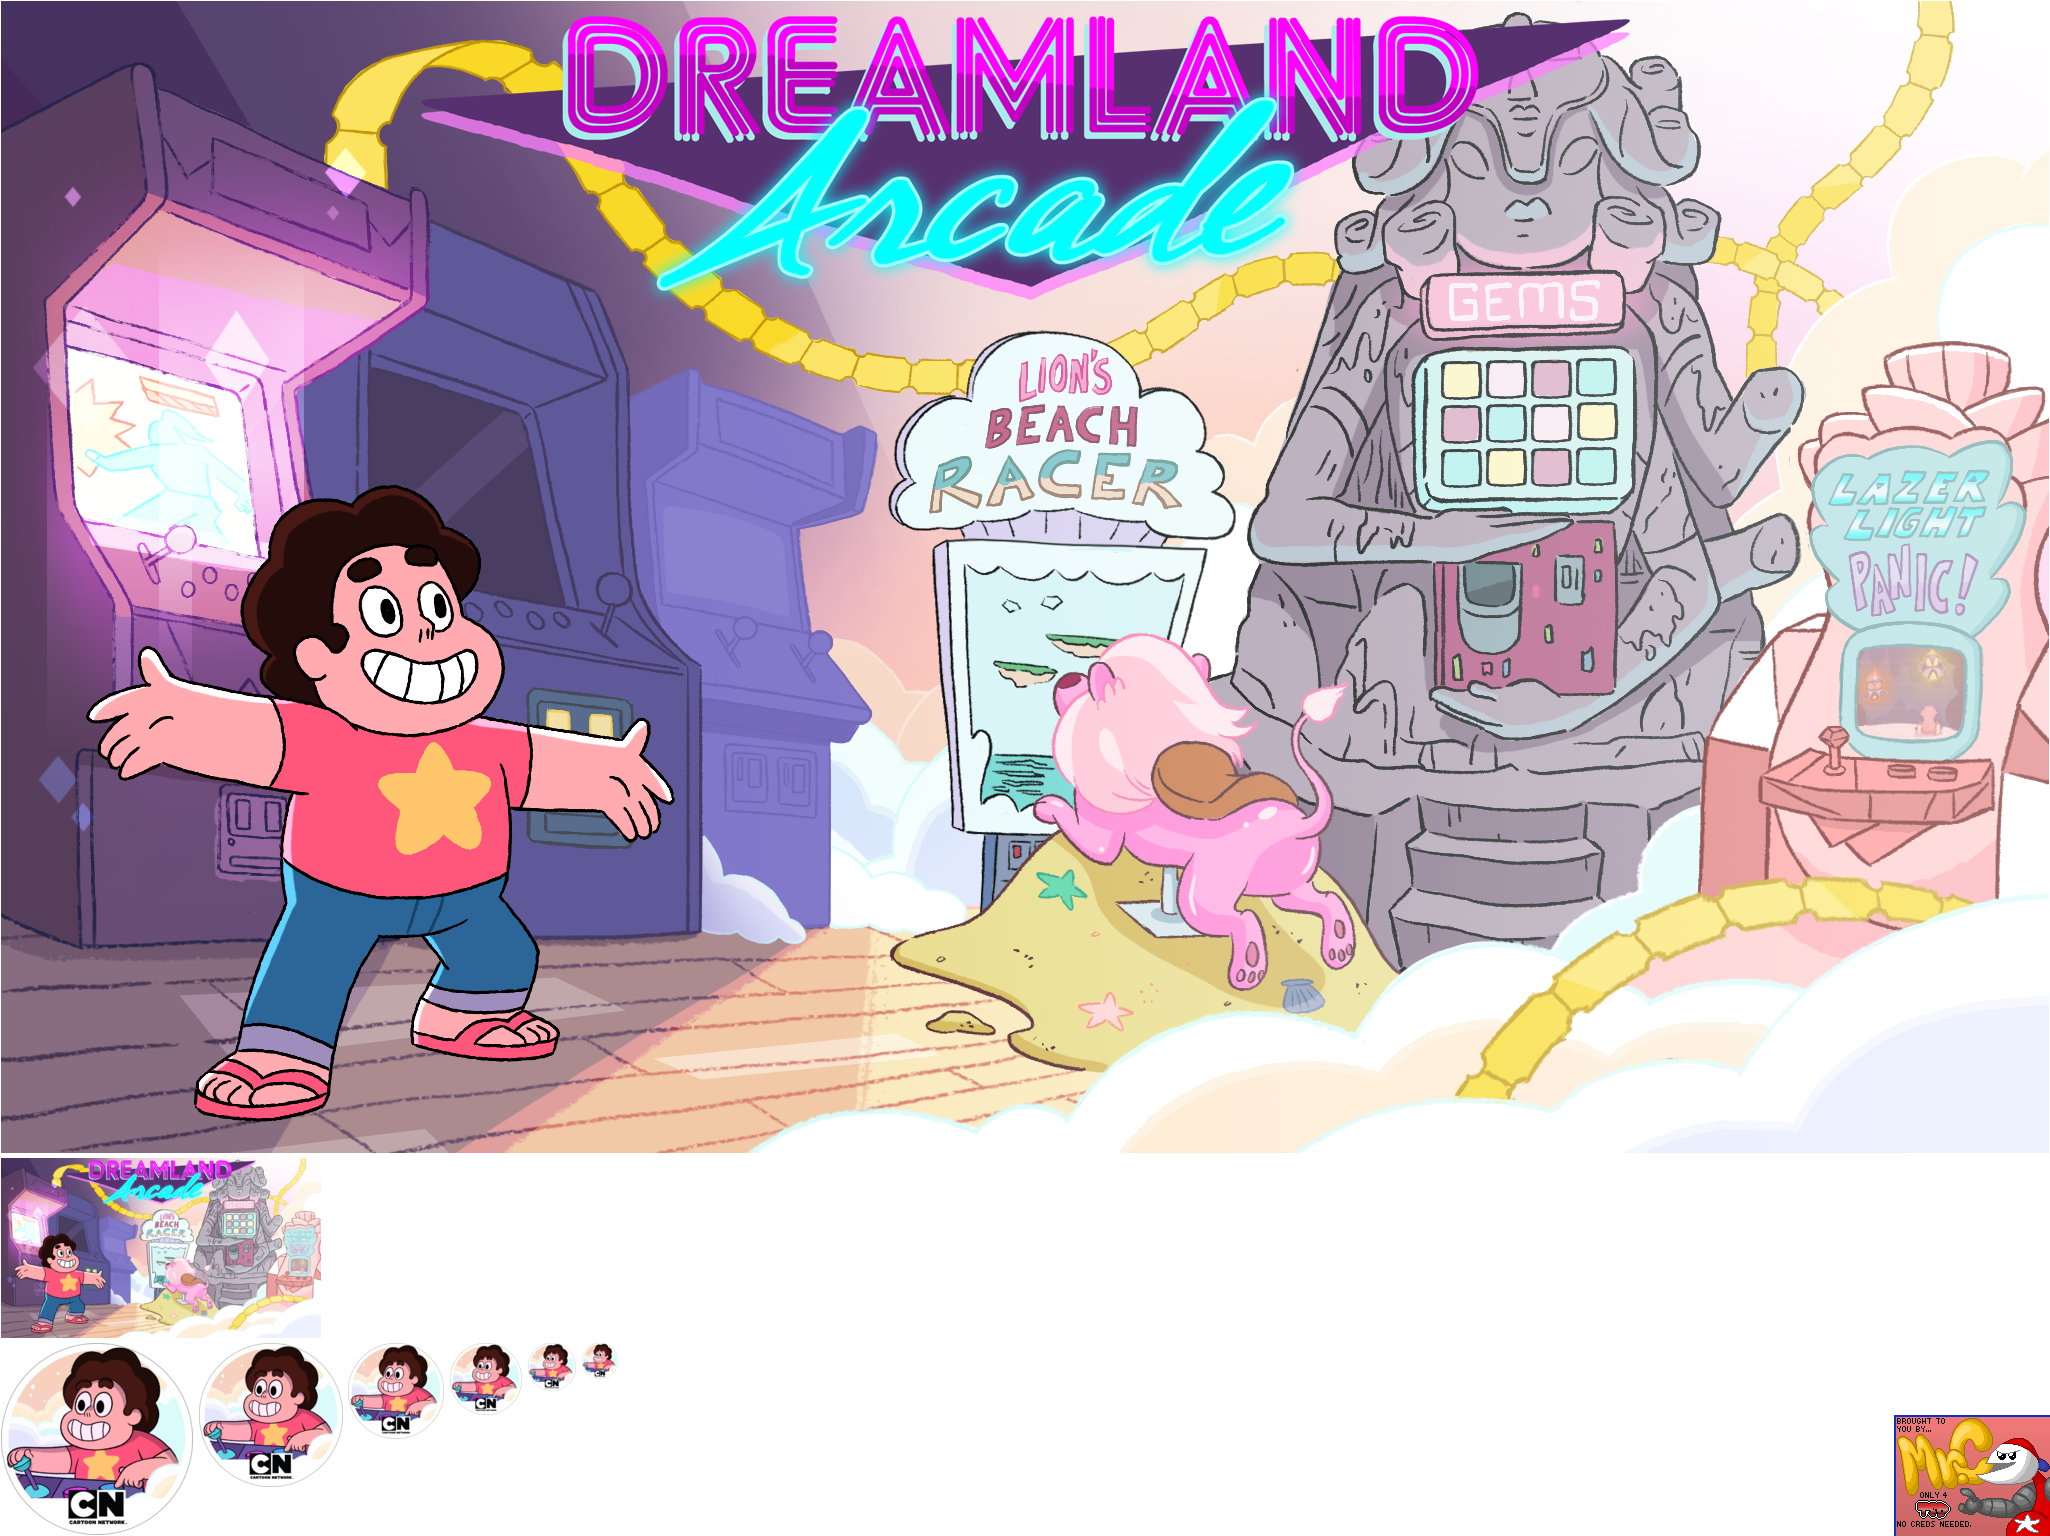 Steven Universe: Dreamland Arcade - Splash Screen and App Icons